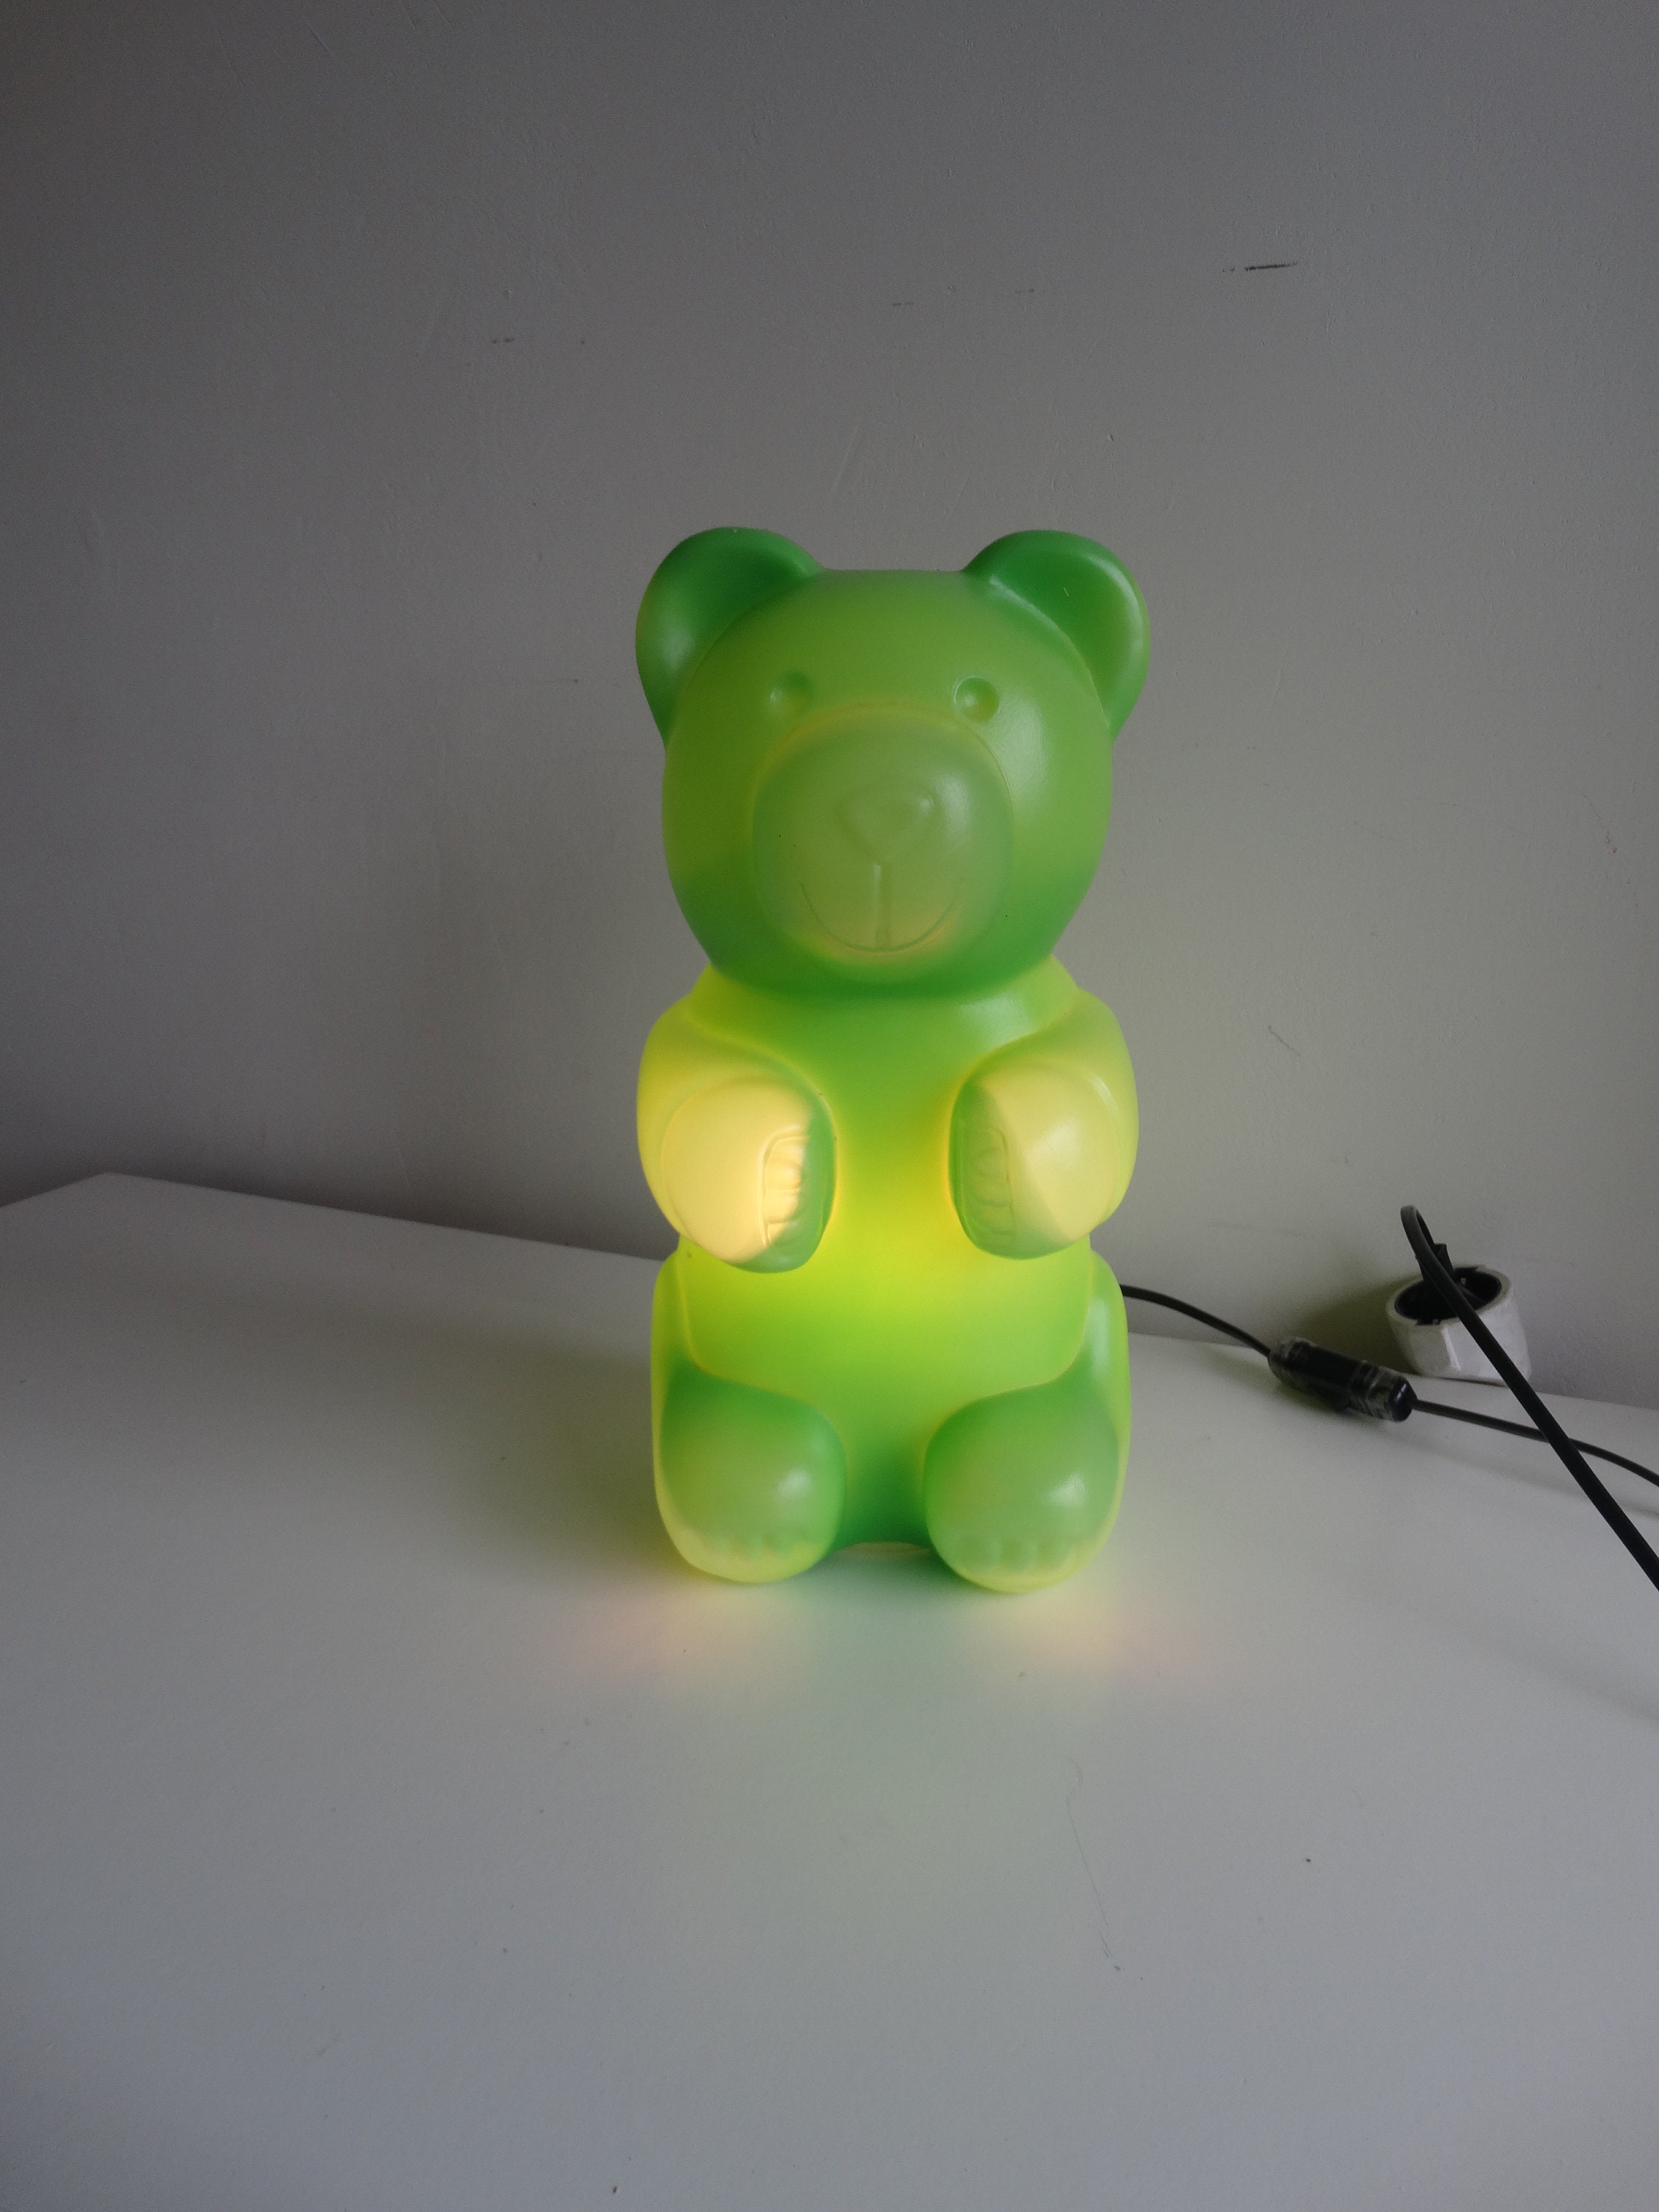 Lebber vintage® - Vintage Messow - Gummi Bear - Haribo bear - candy bear -  lamp - green